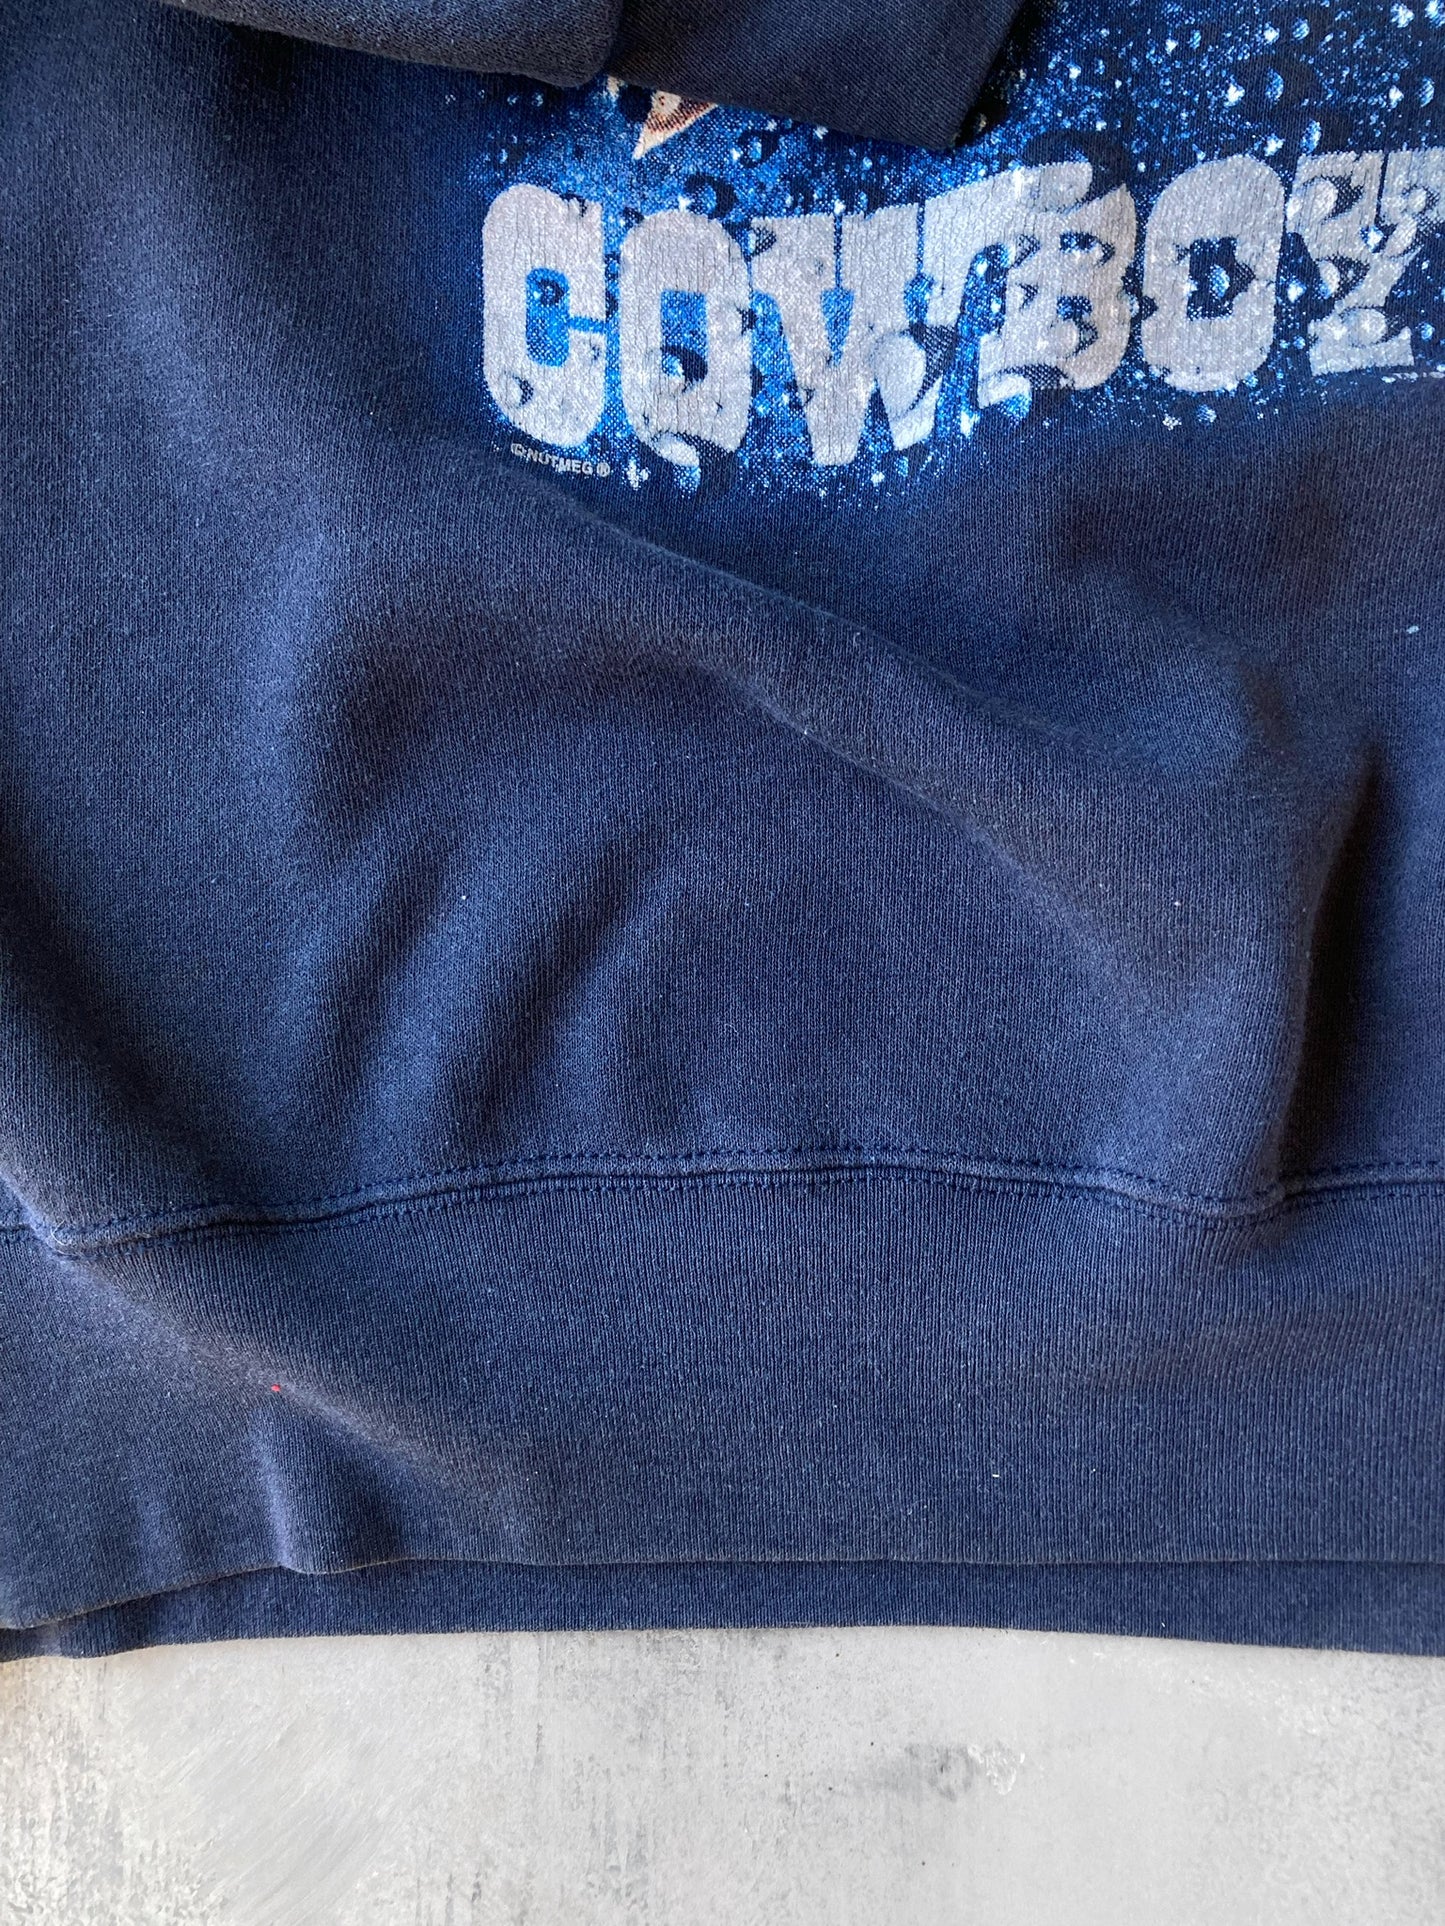 Dallas Cowboys Sweatshirt '99 - XXL